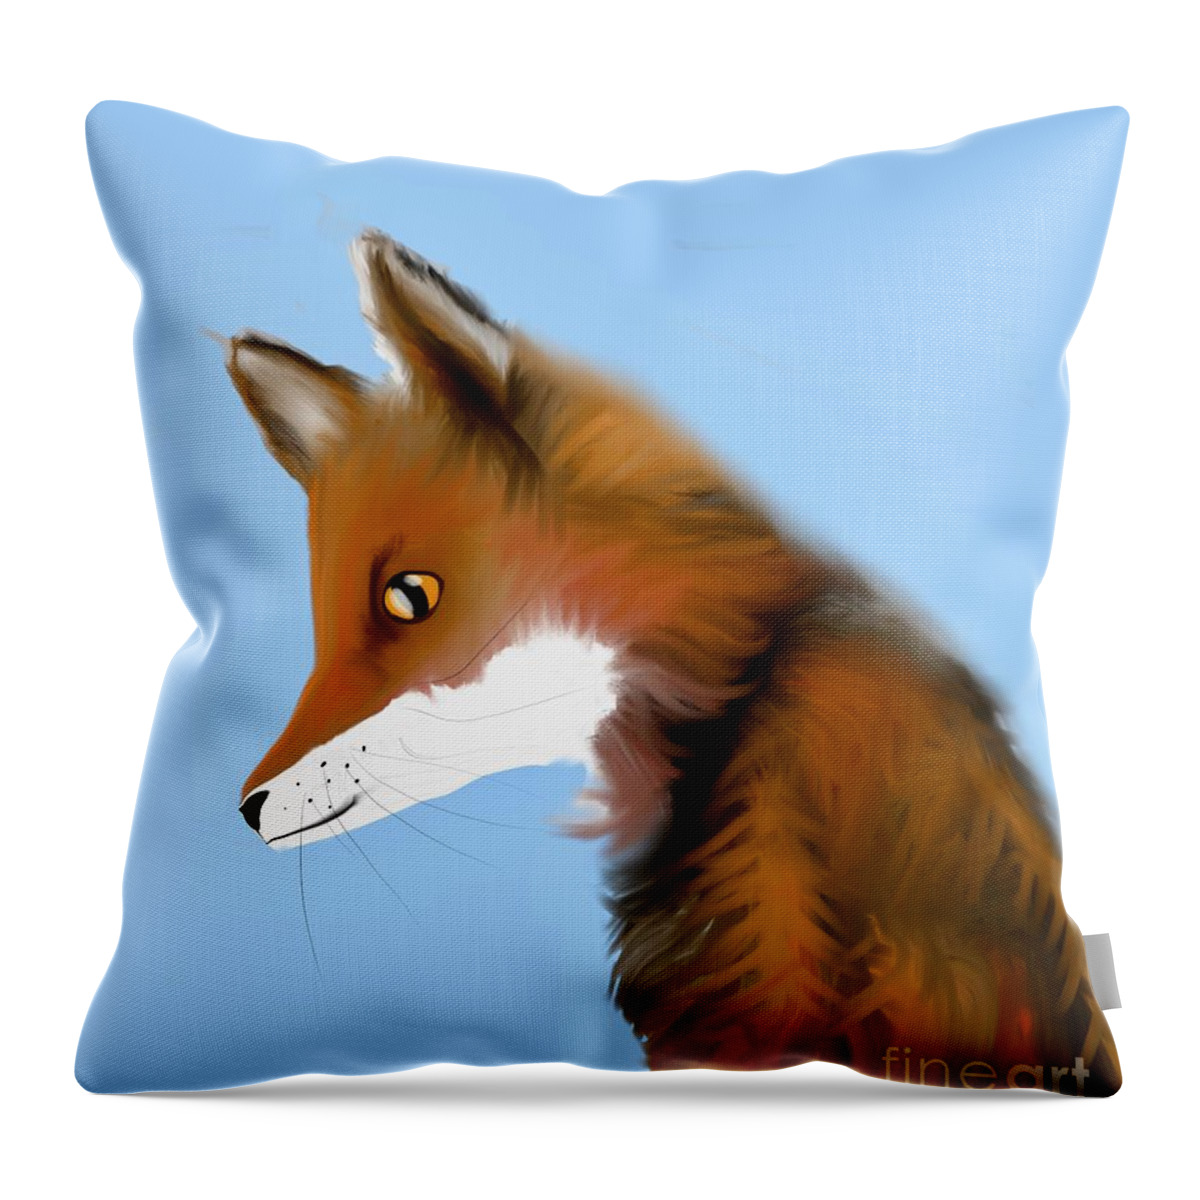 Fox Throw Pillow featuring the digital art The fox by Elaine Rose Hayward